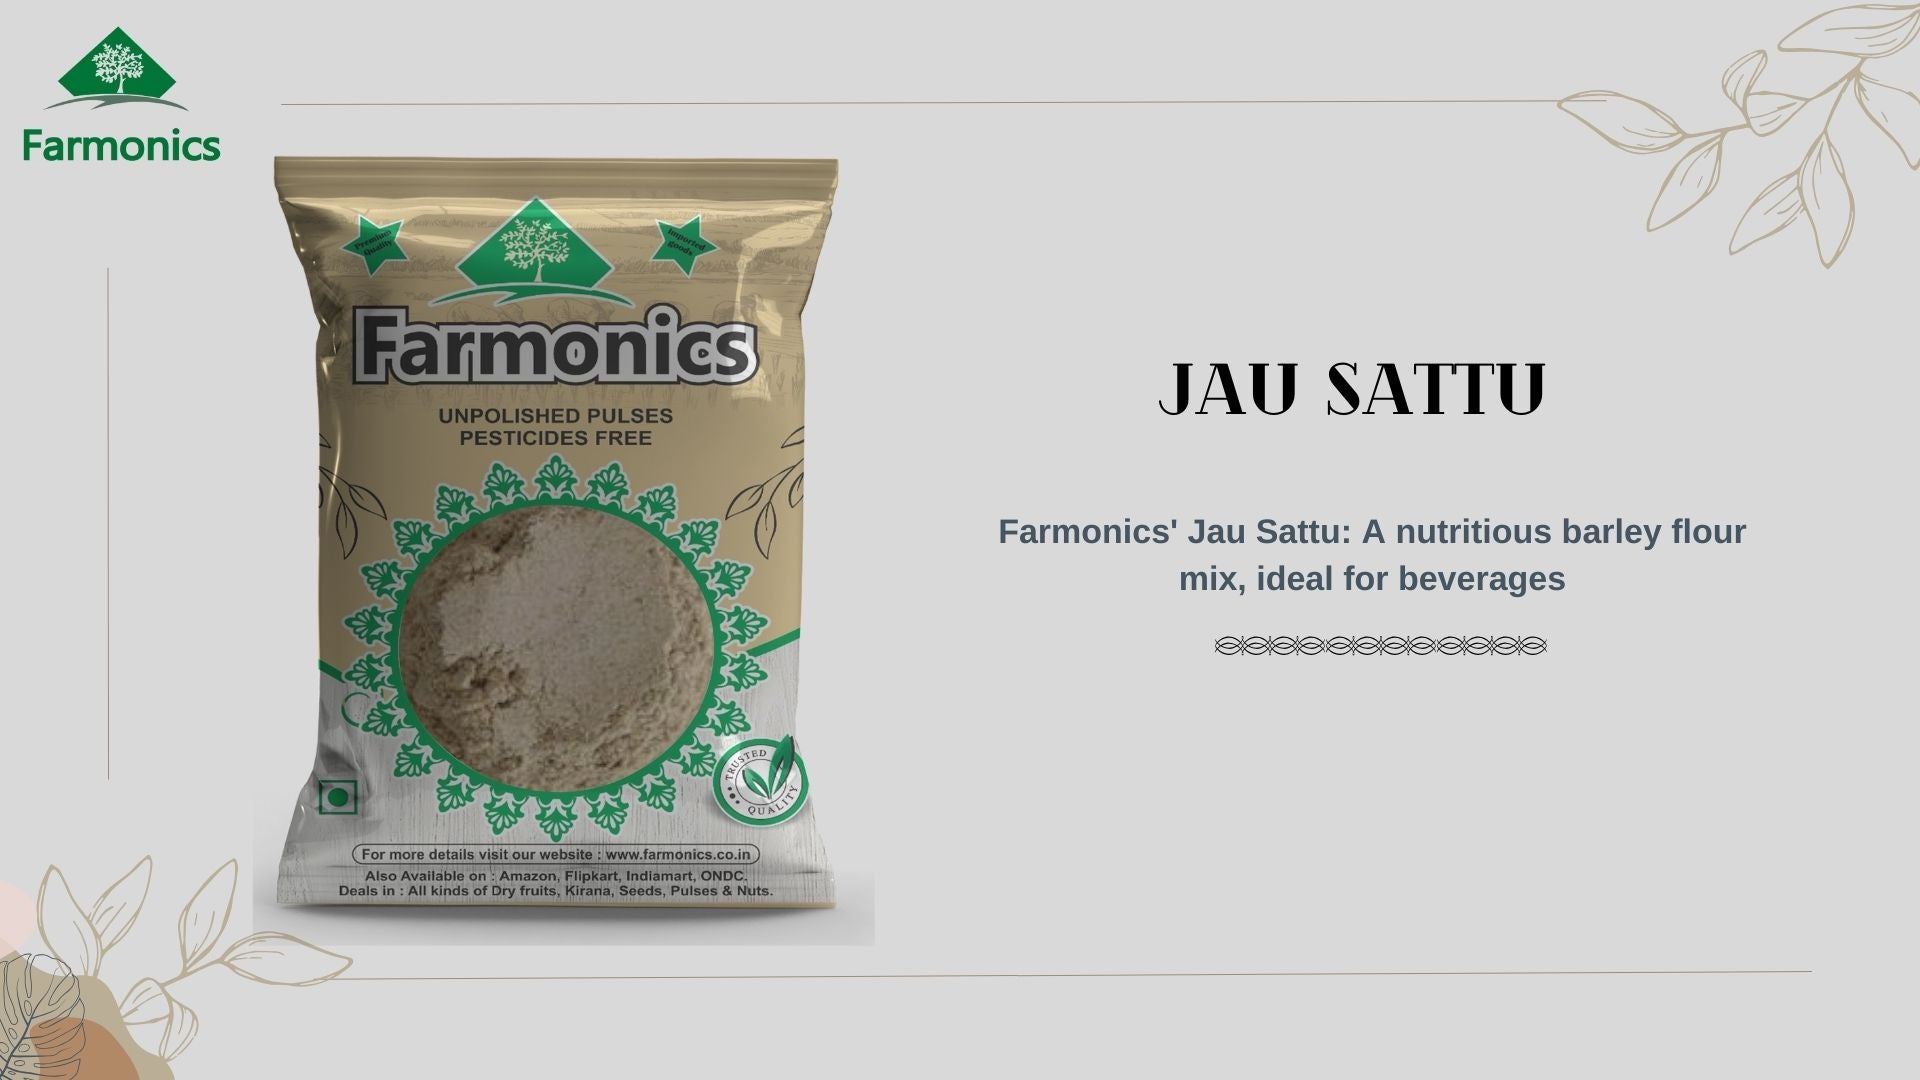 Farmonics Jau sattu a nutritious barley flour mix, ideal for benerages 